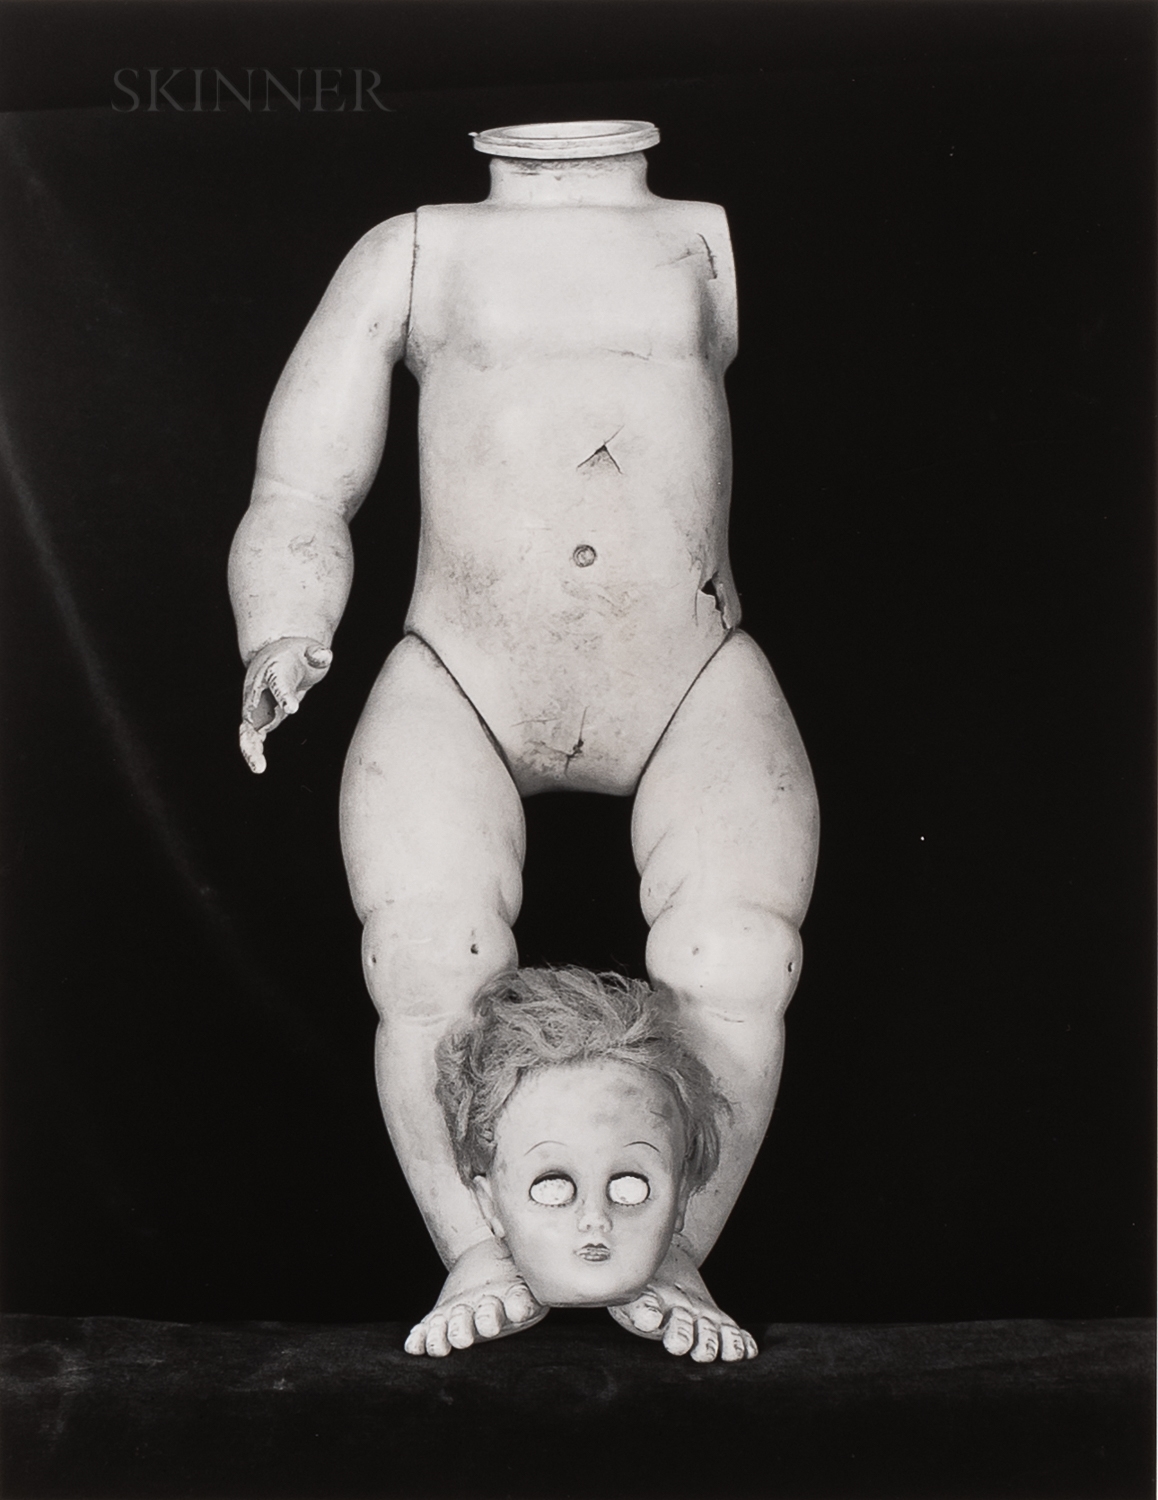 baby doll head creepy | Art Print